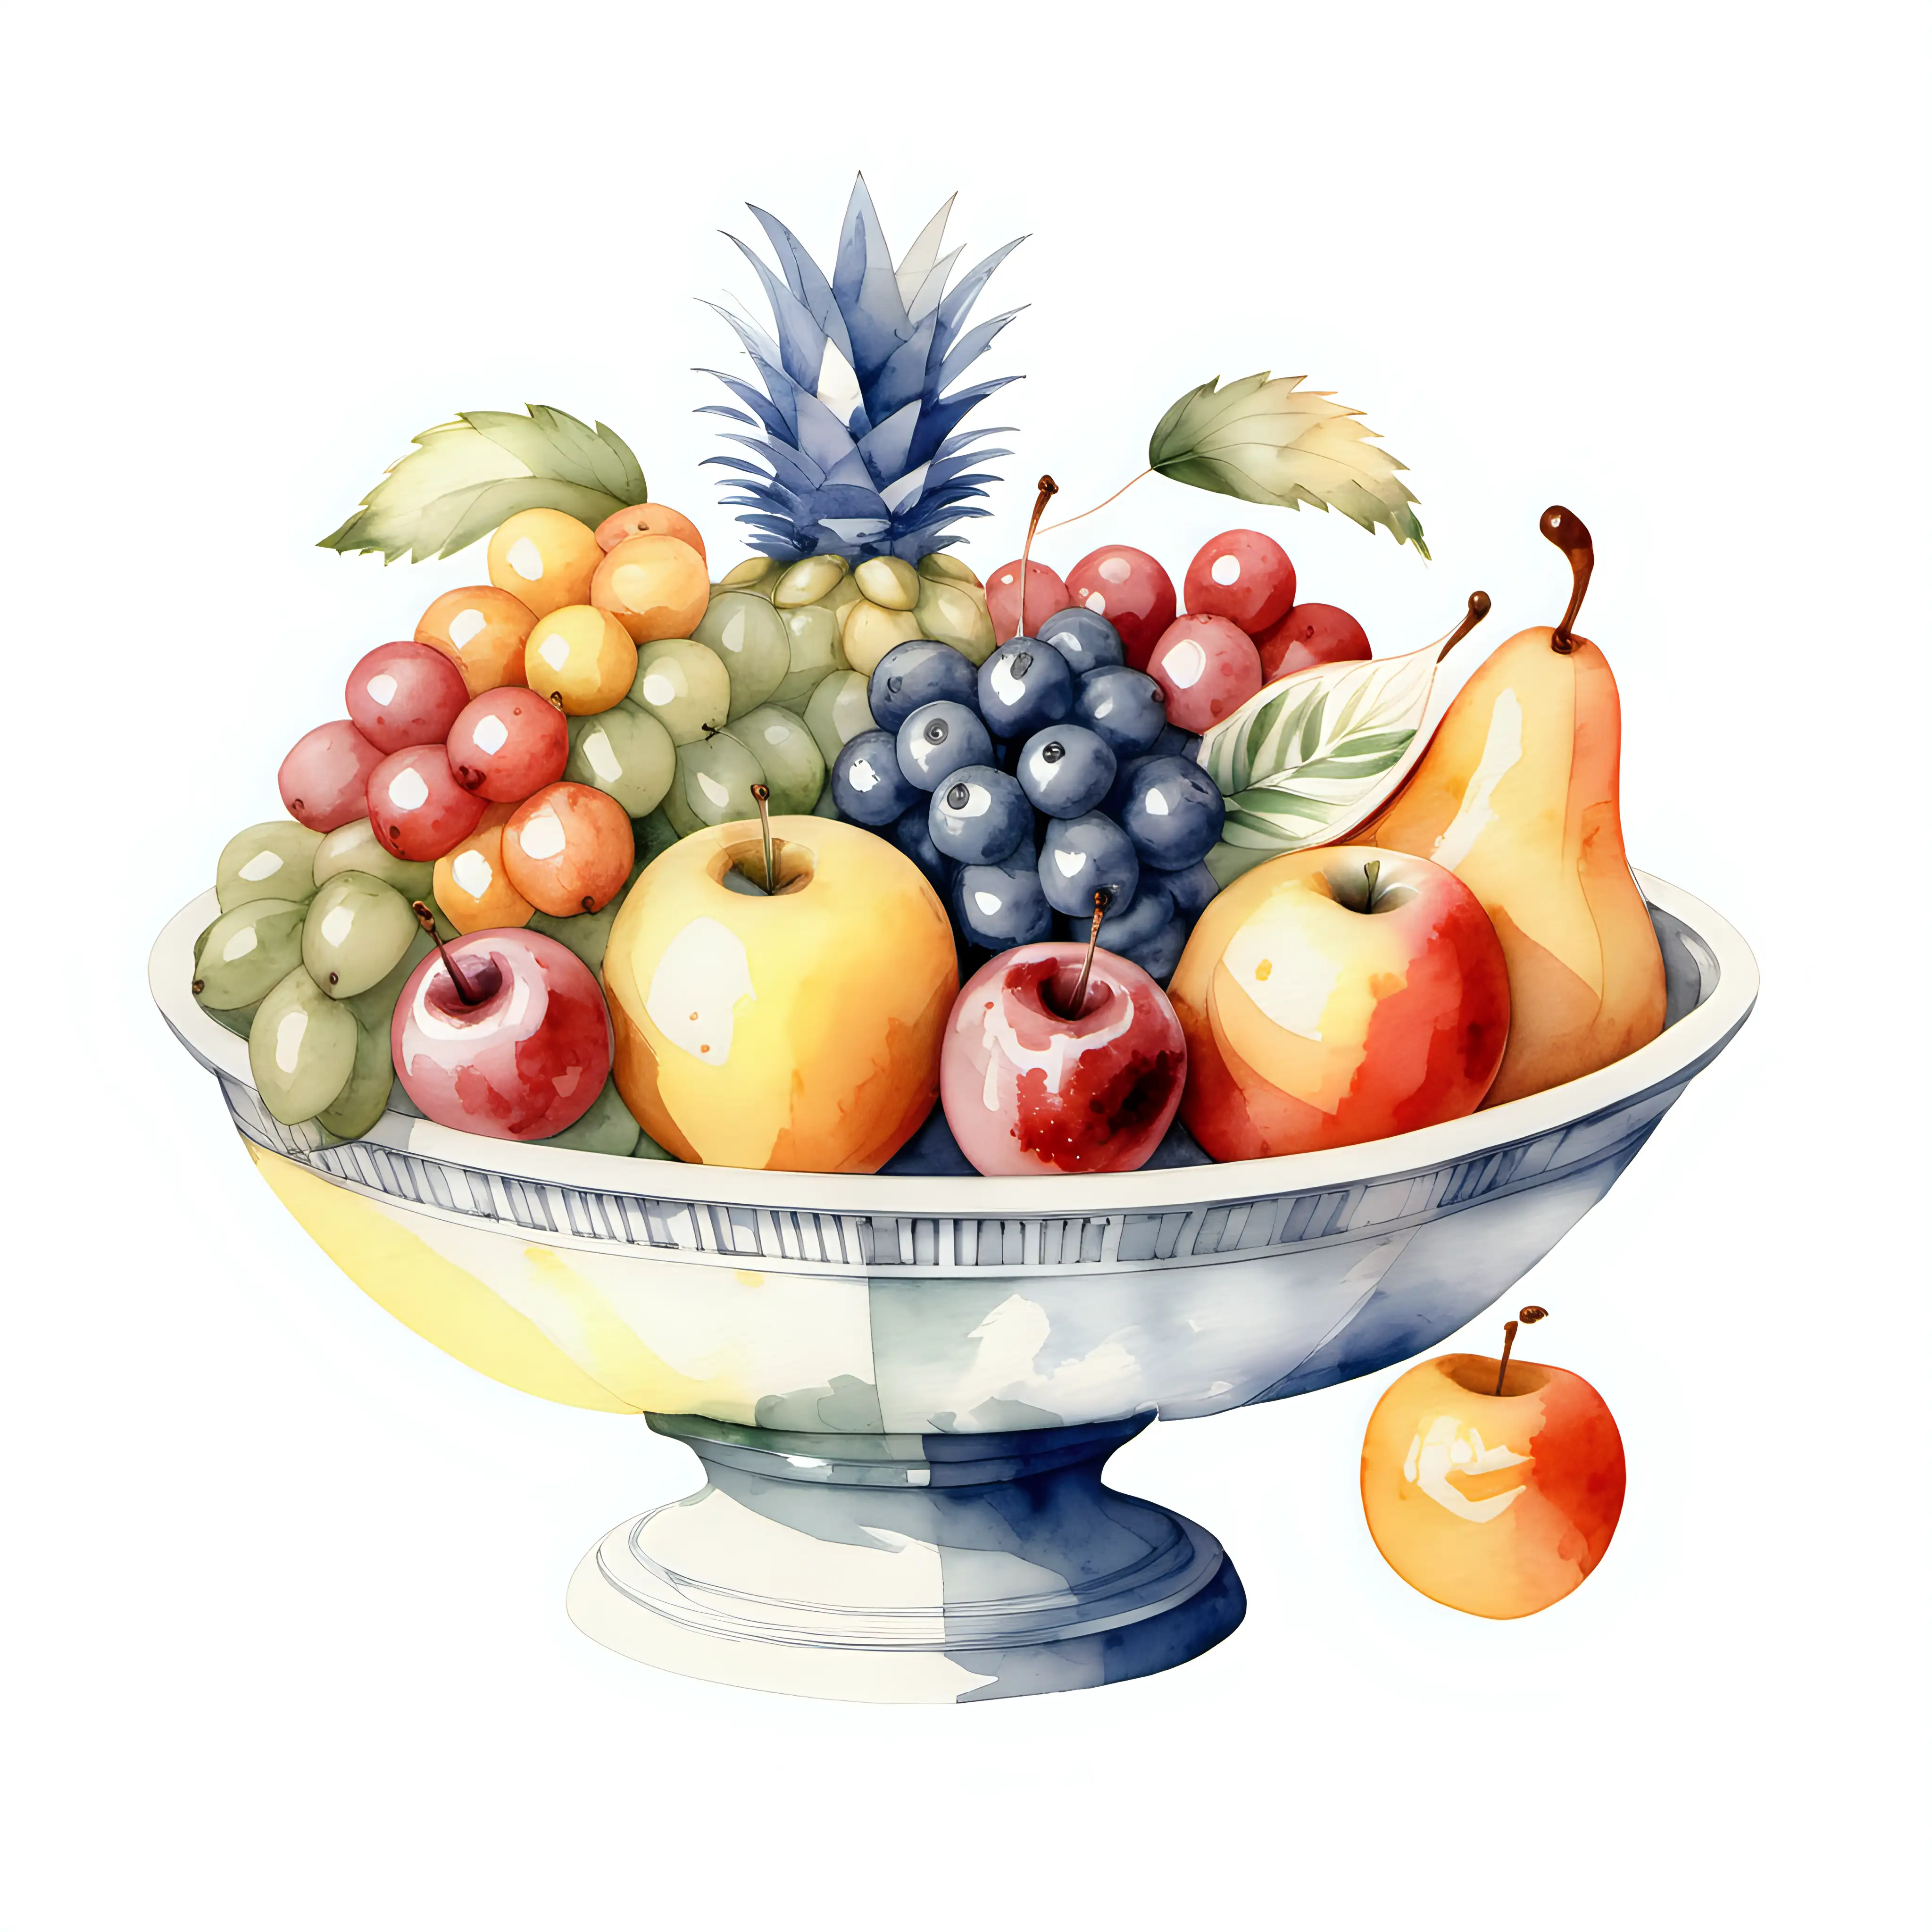 Vintage Style Watercolour Fruit Bowl on White Background